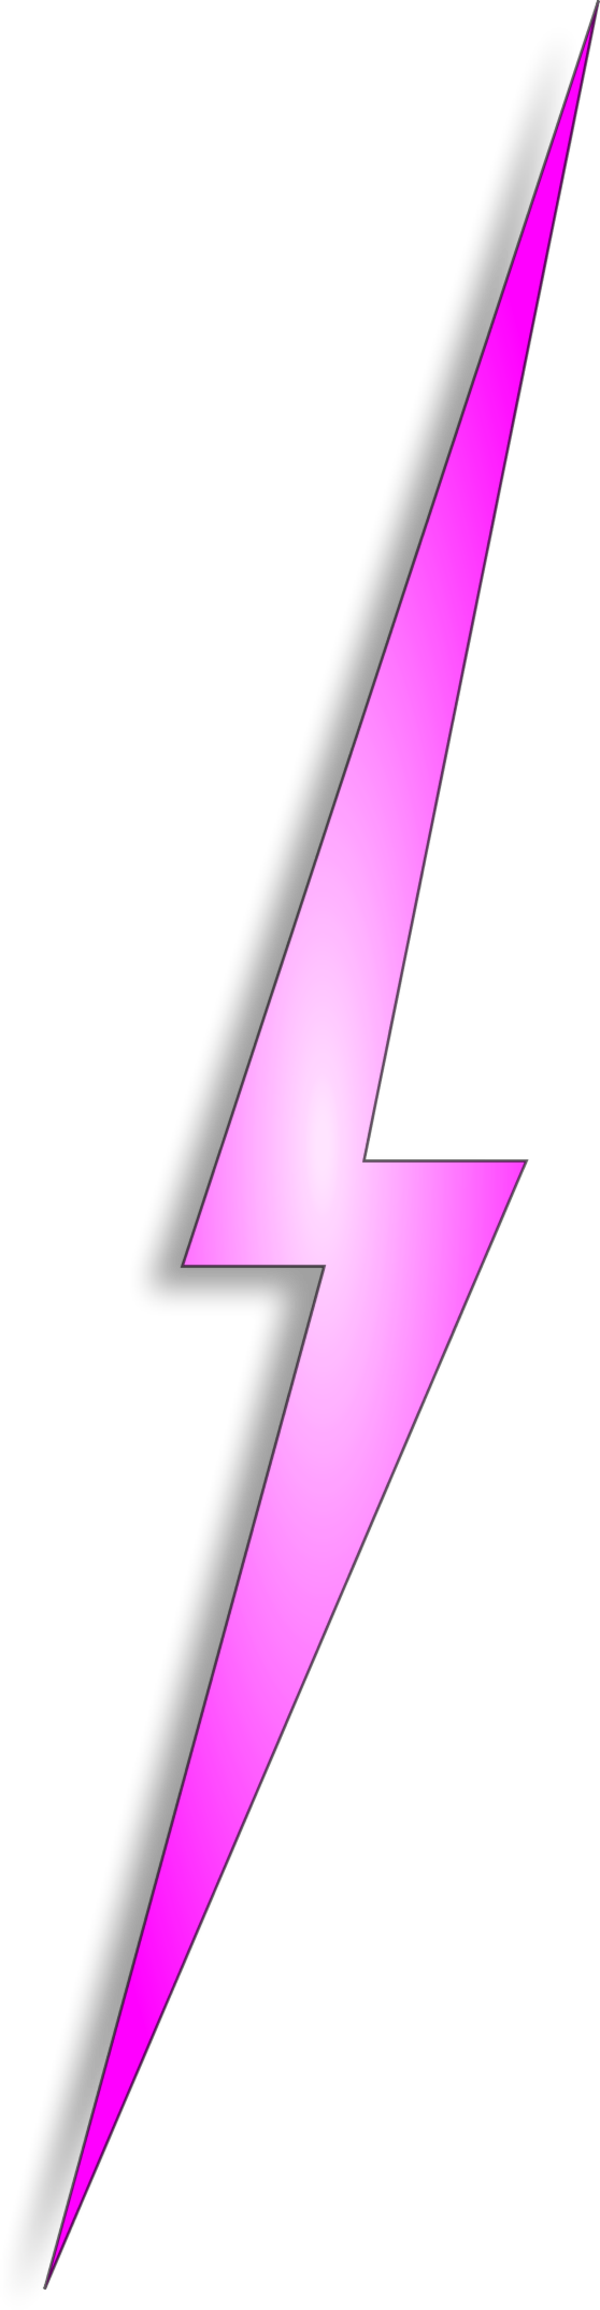 Lightning bolt yellow lightning electricity bolt thunder vector clip art